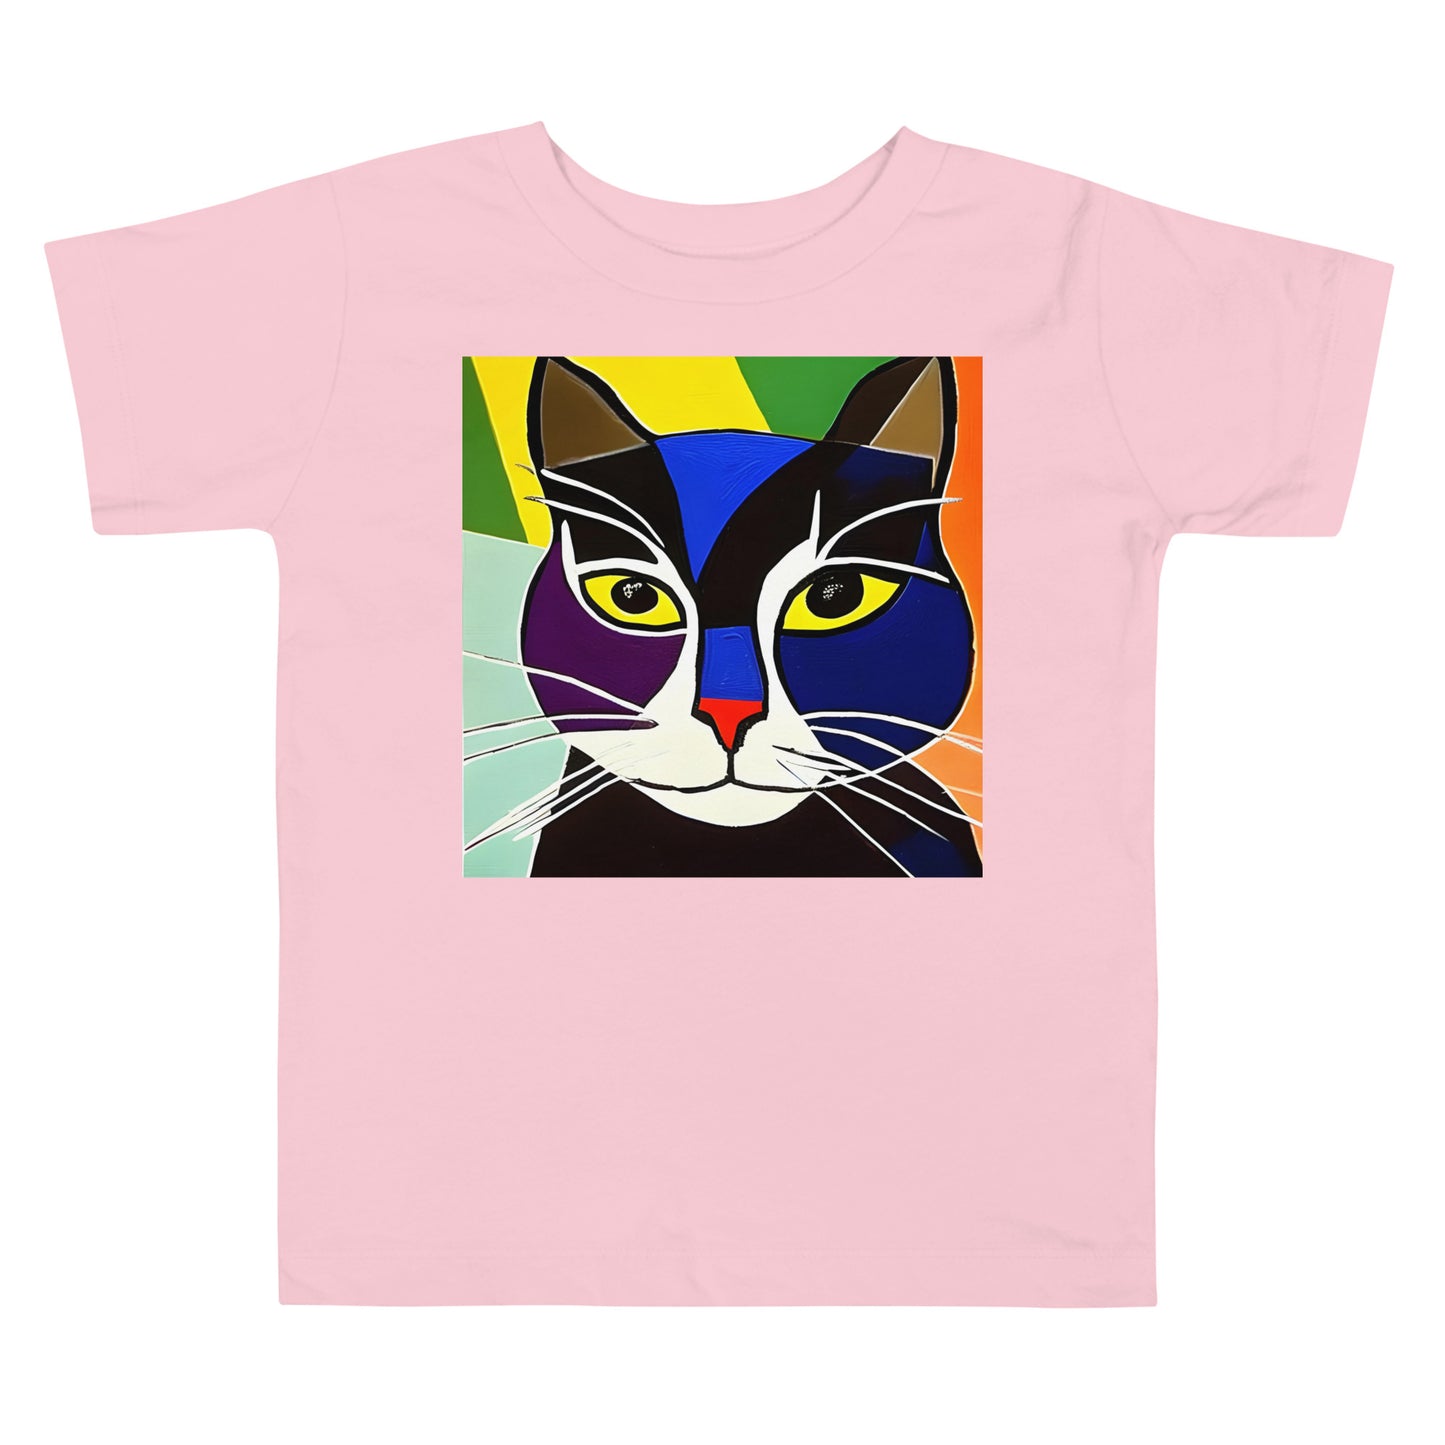 Purrfect Toddler's T-Shirt - 002